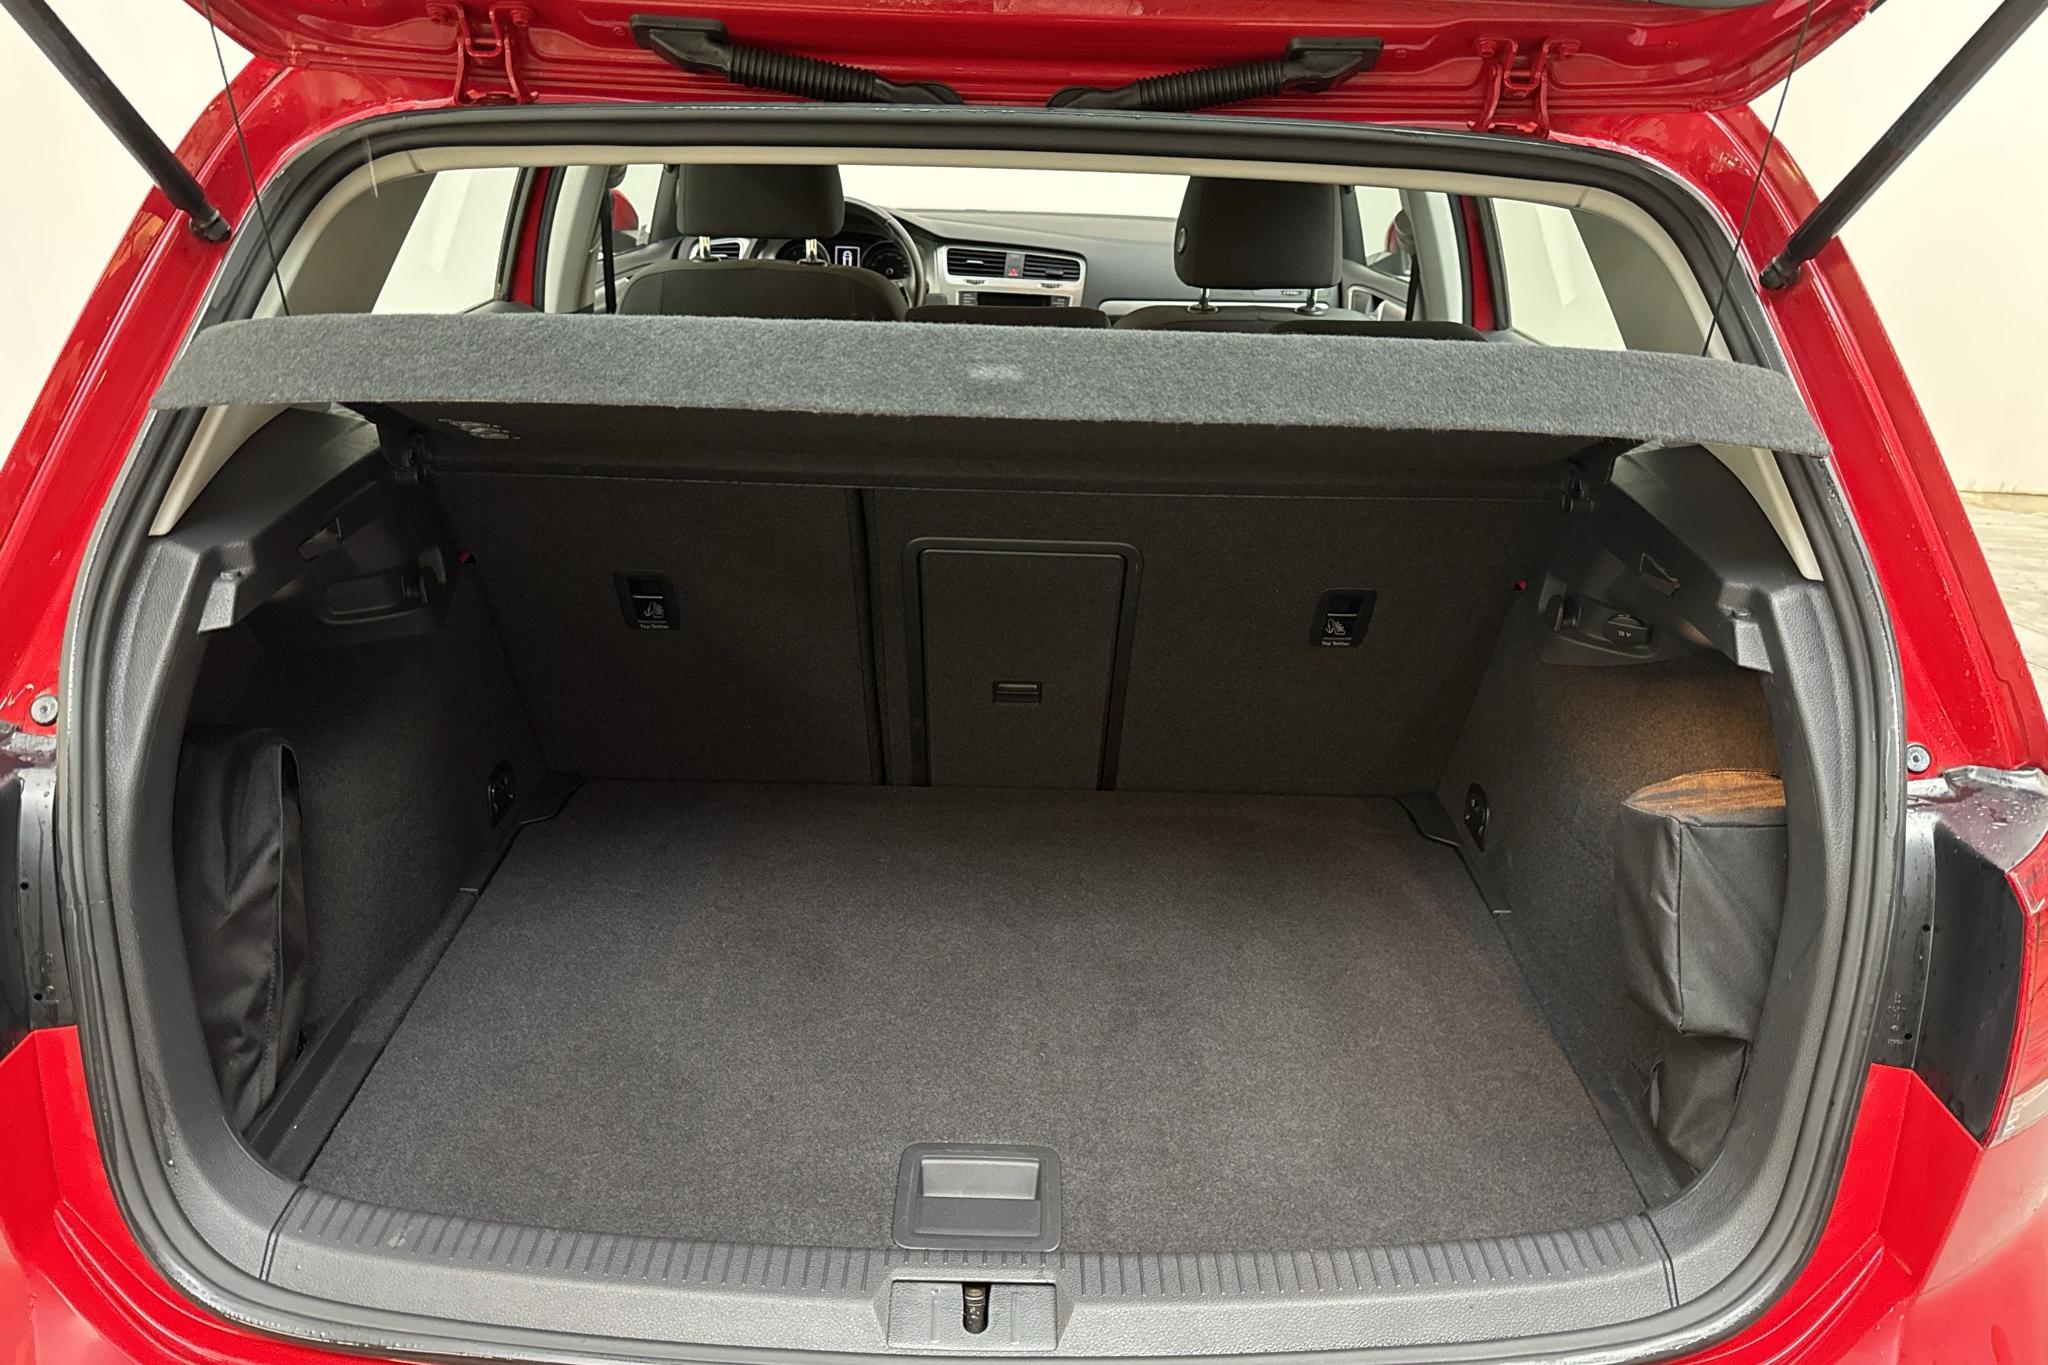 VW Golf VII 1.4 TGI 5dr (110hk) - 42 010 km - Manual - red - 2015